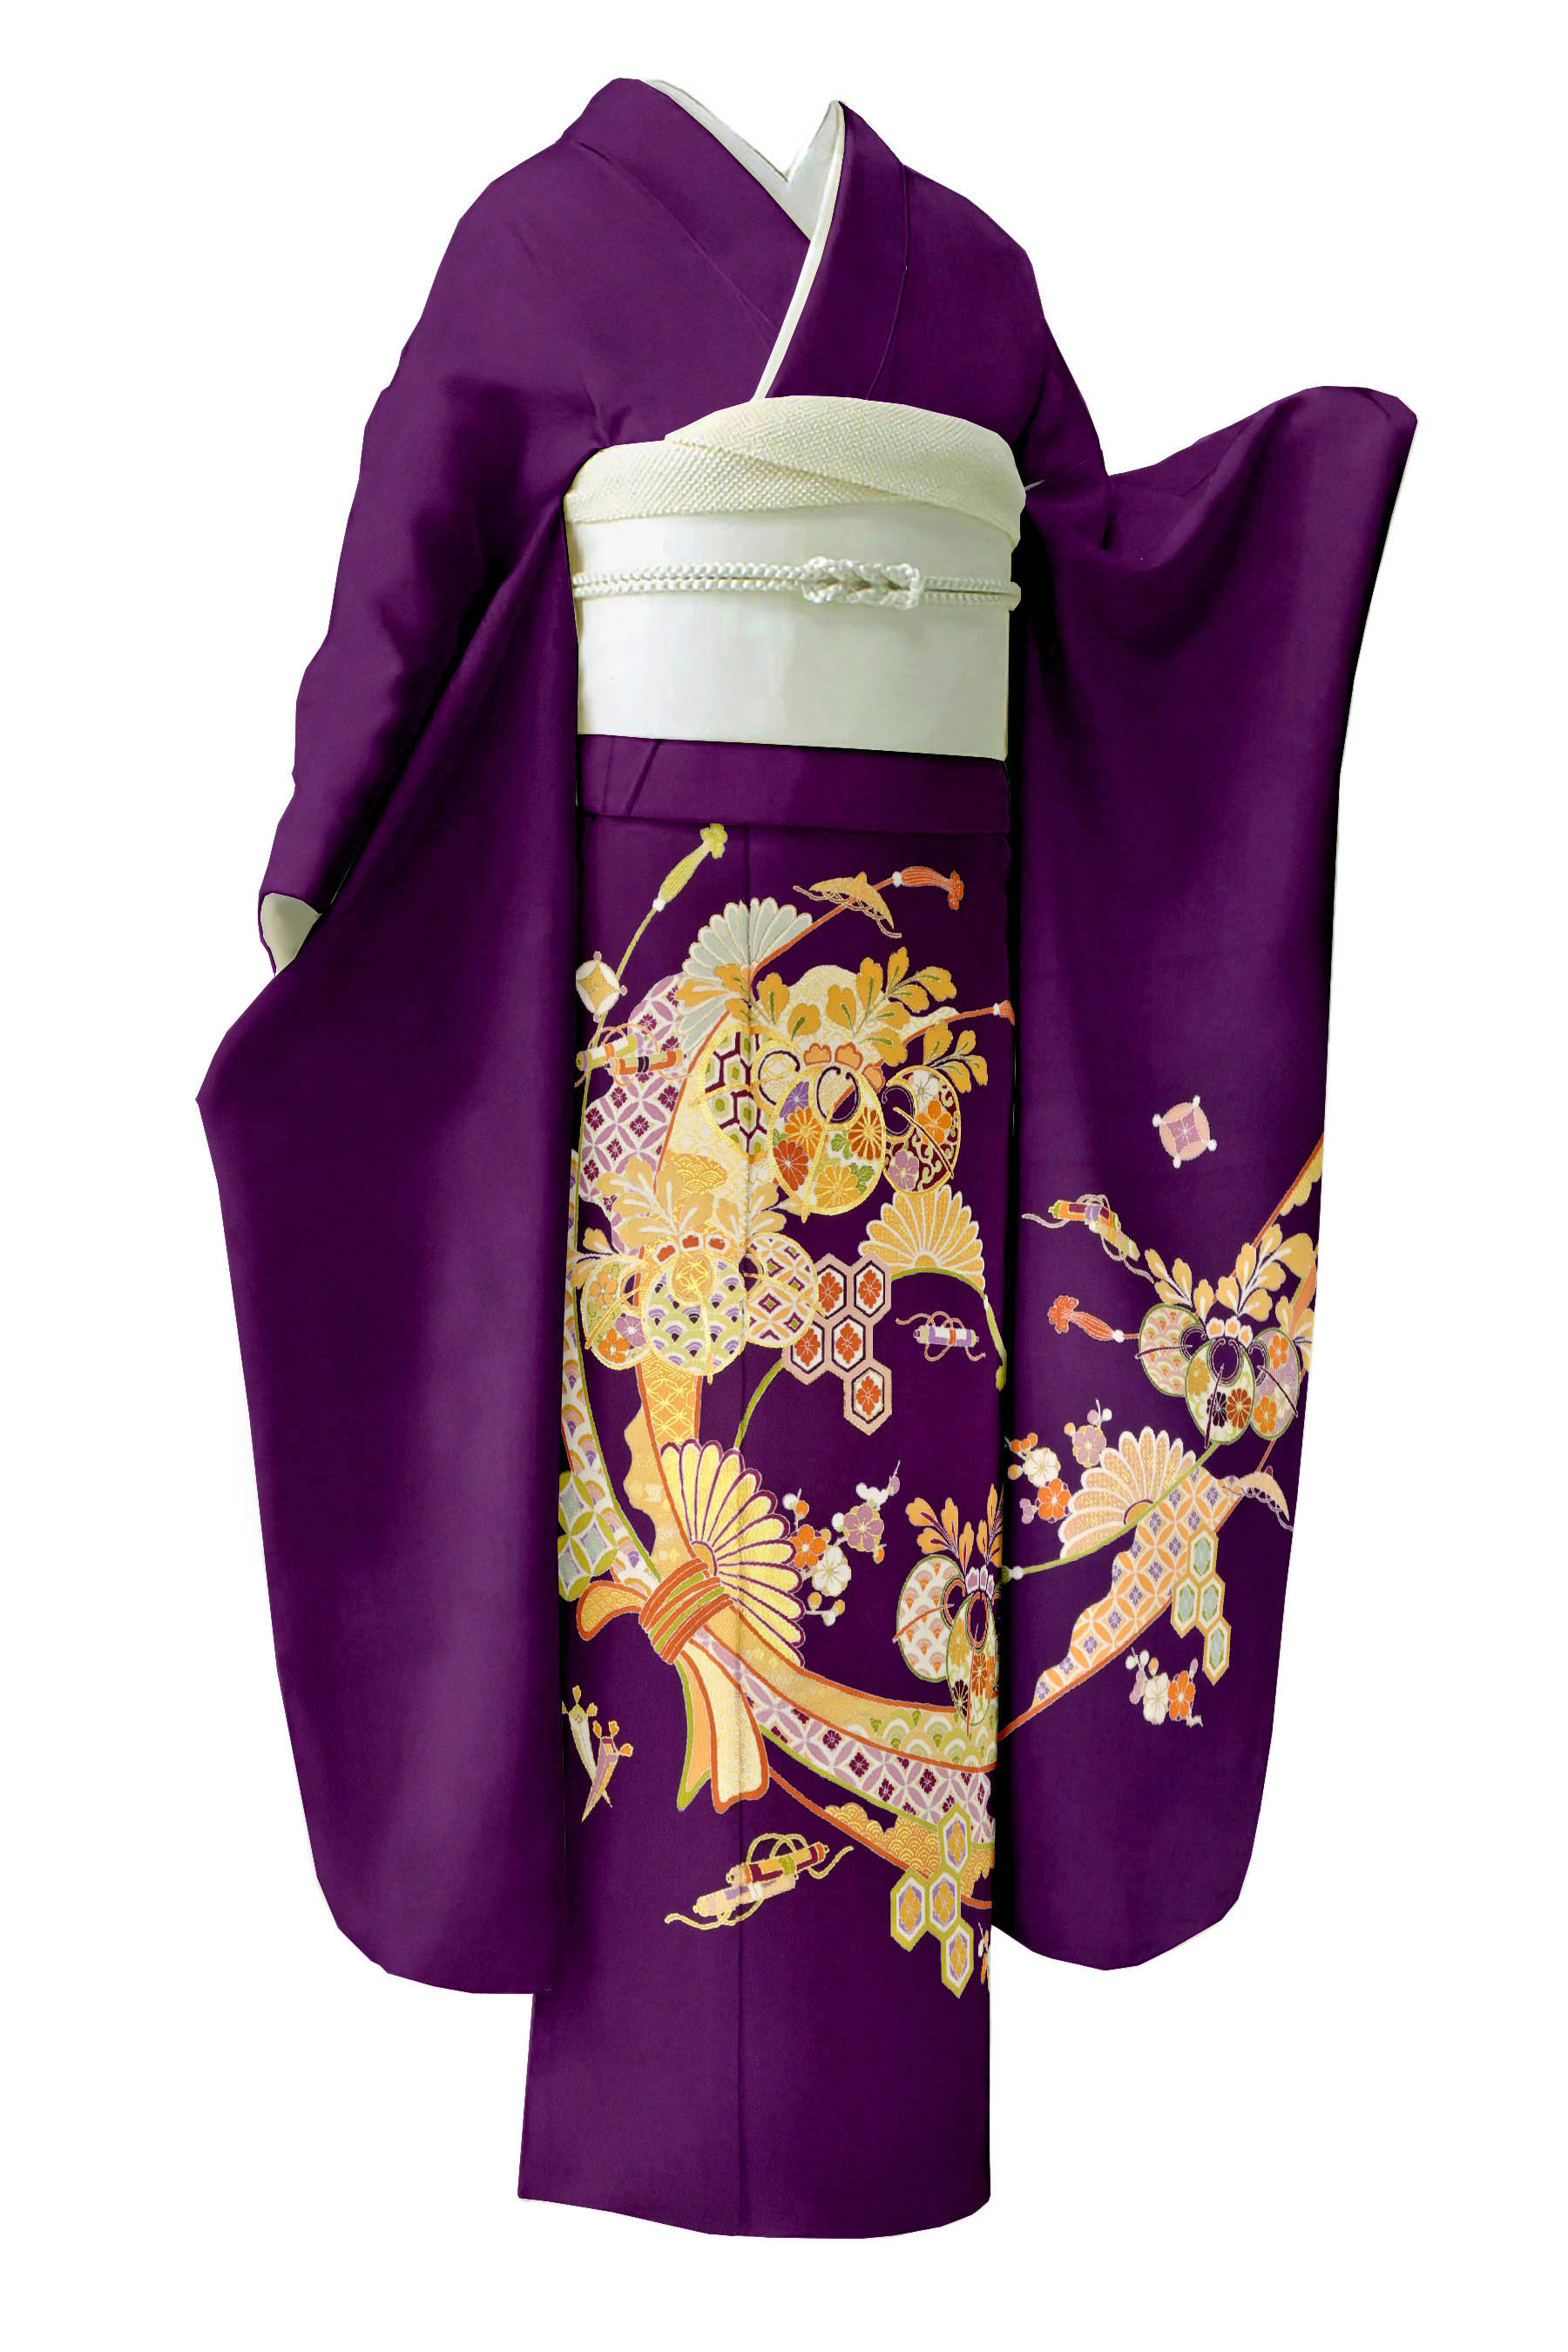 高島屋誂え 千總 濃紫 絞り刺繍 逸品振袖 川島織物袋帯フルセット - 振袖